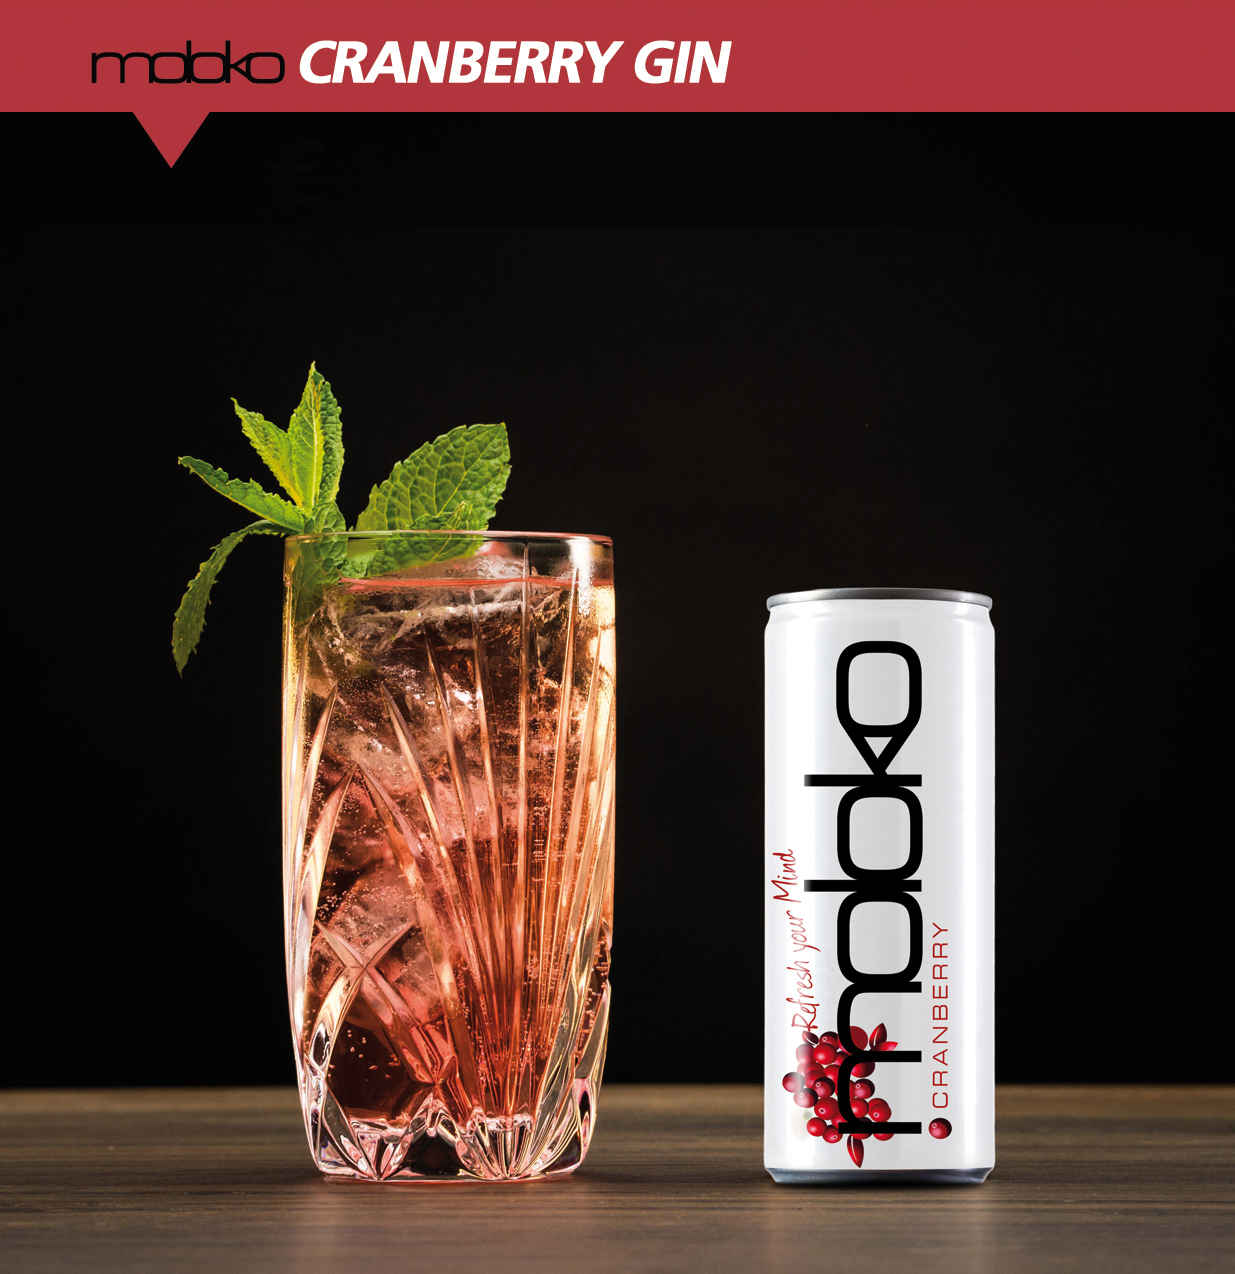 Moloko Cranberry Gin